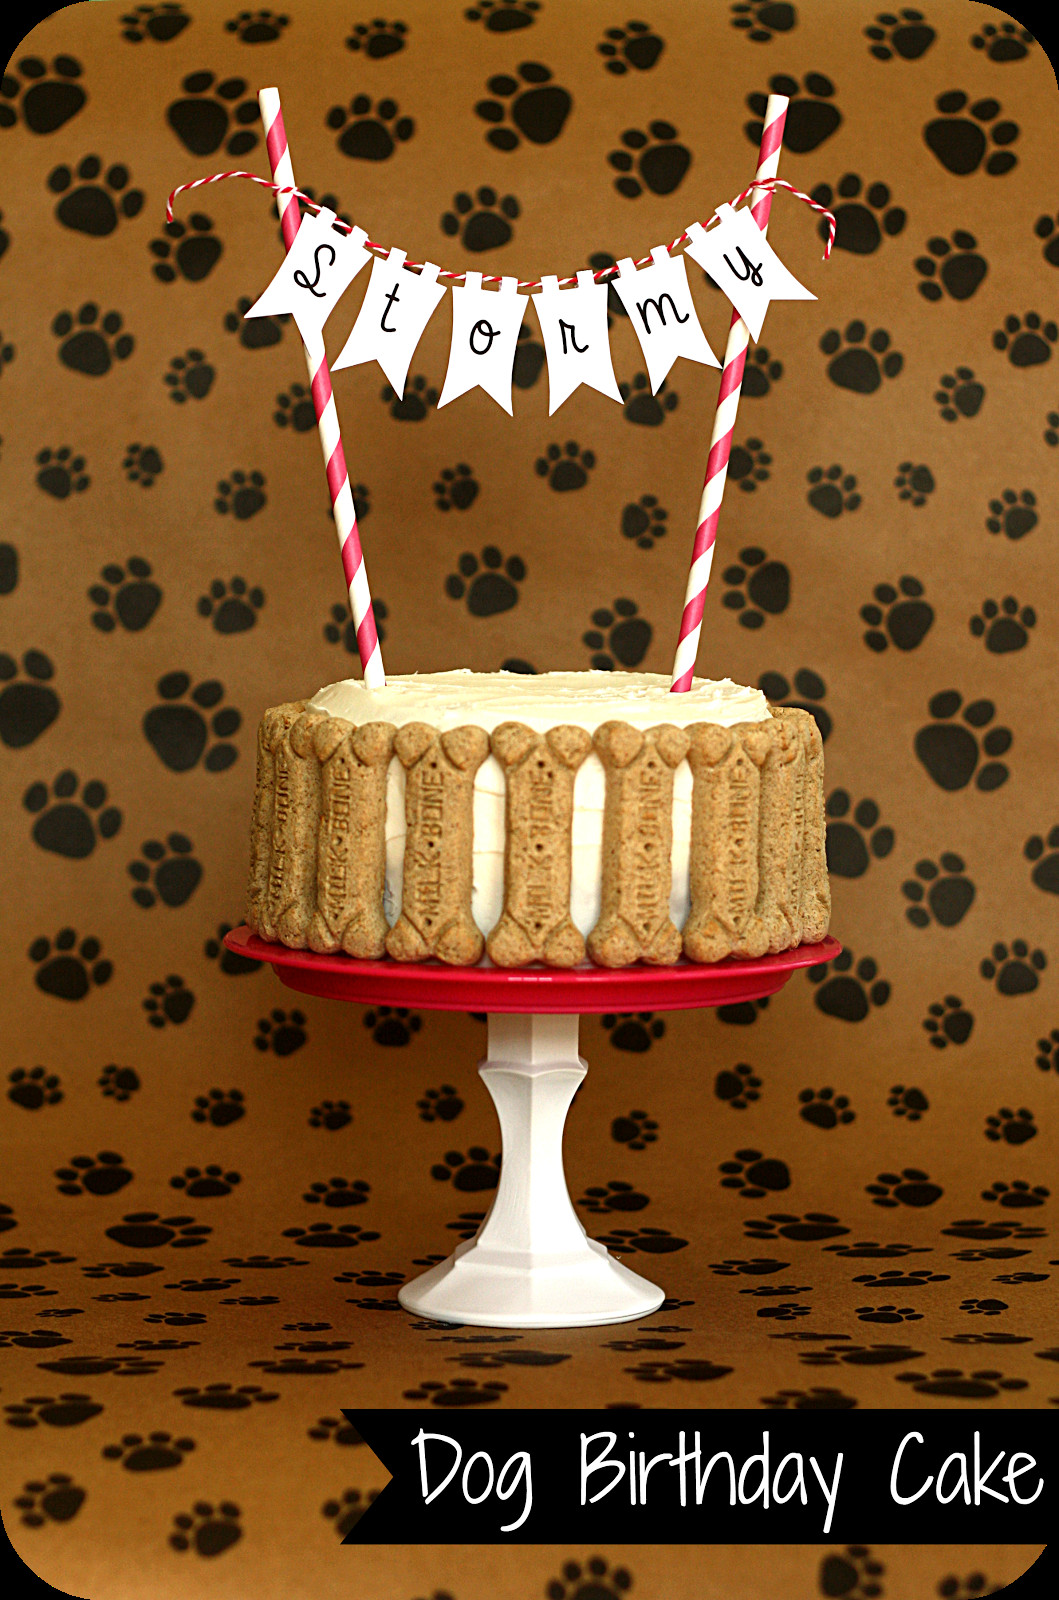 Doggie Birthday Cake Recipes
 Keeping My Cents ¢¢¢ Dog Birthday